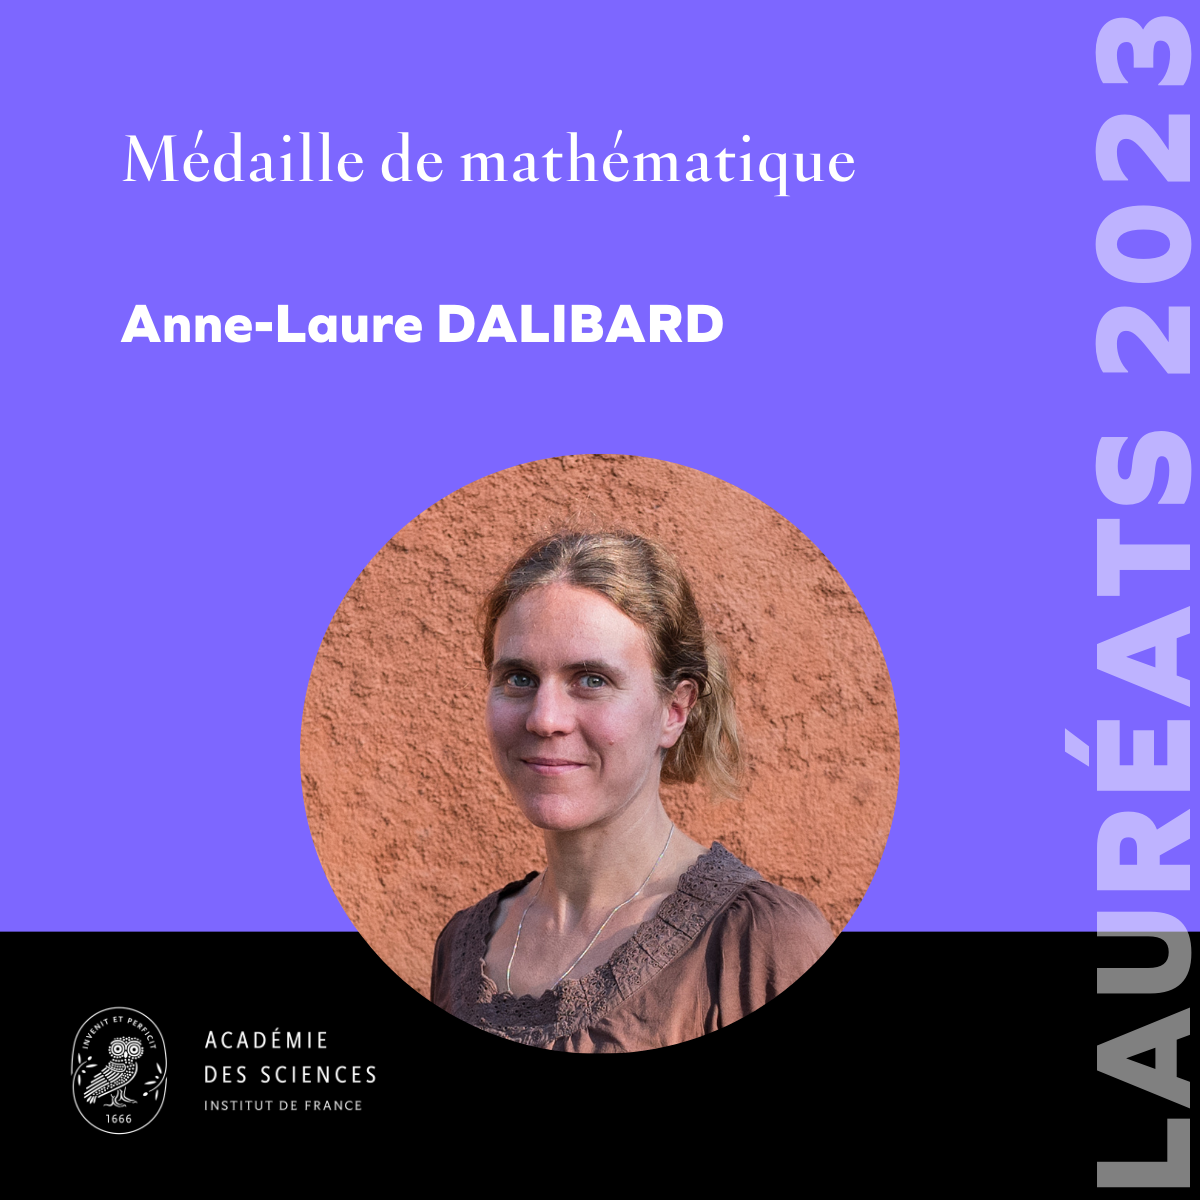  Anne-Laure DALIBARD